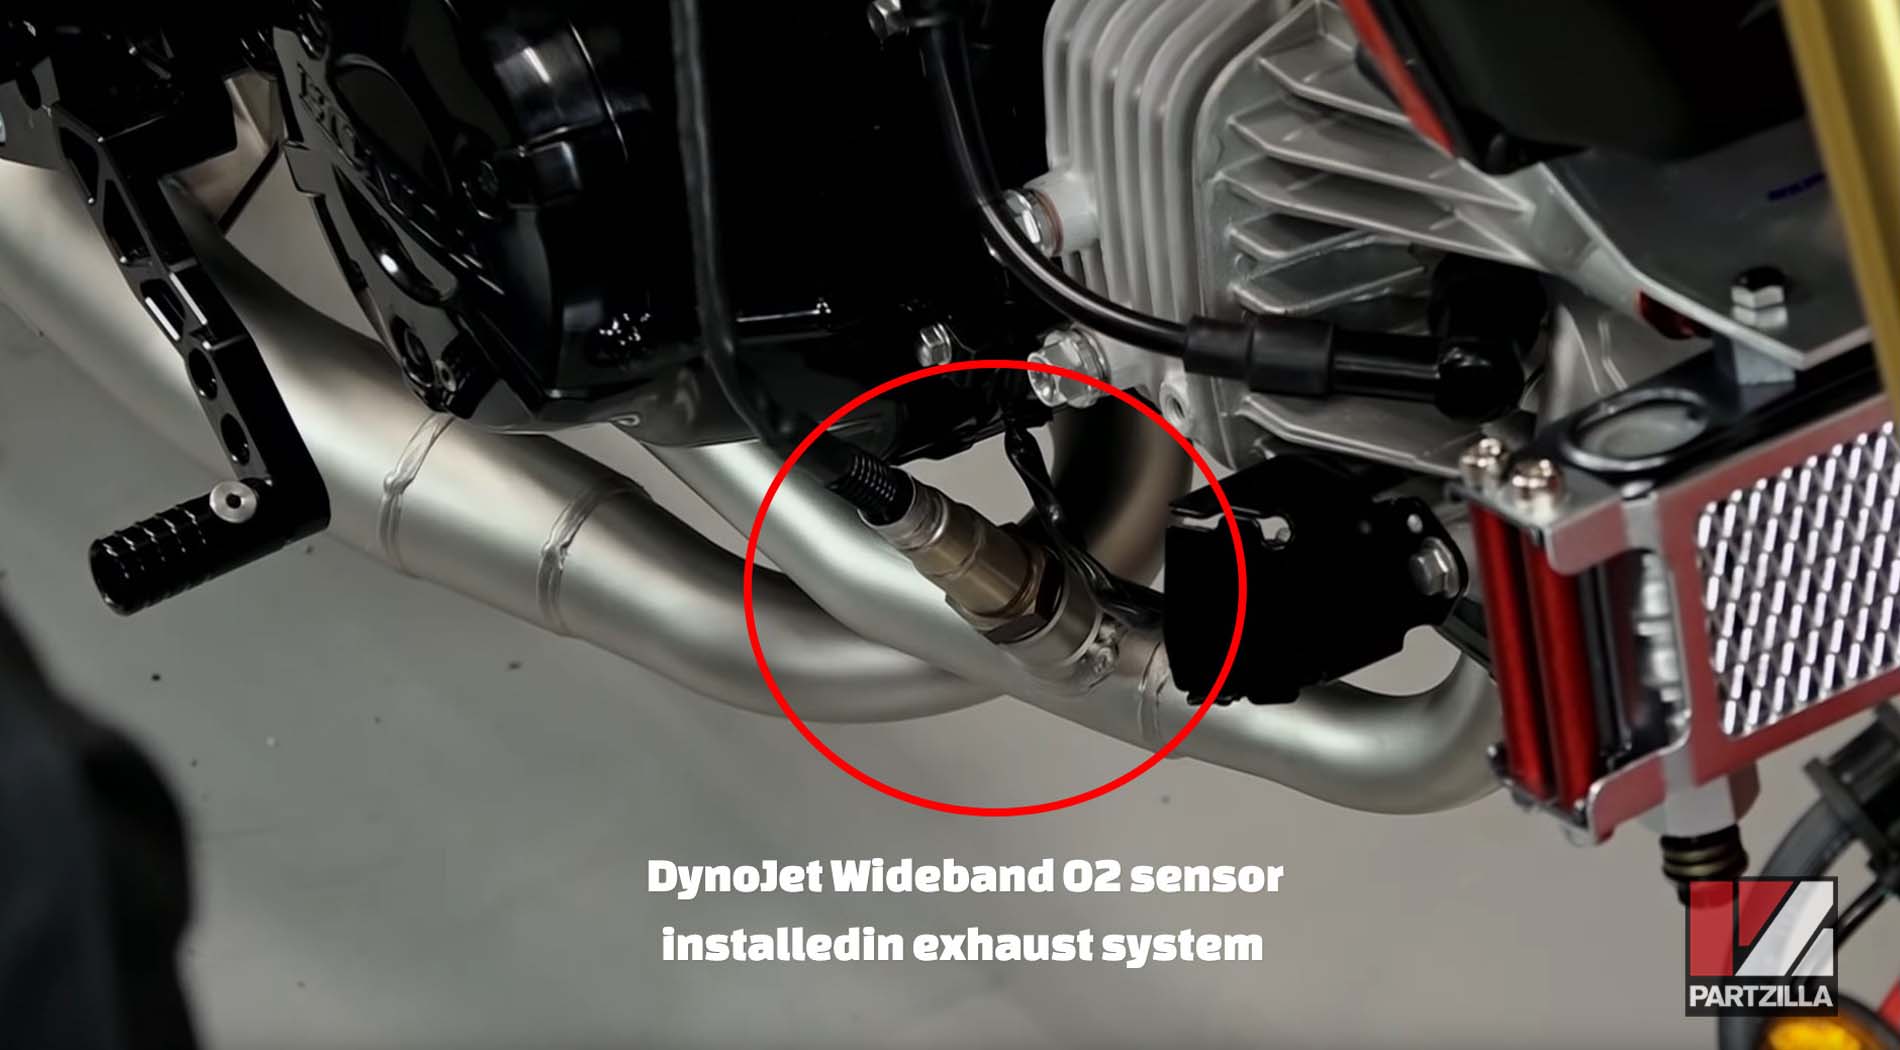 Honda Grom aftermarket upgrades DynoJet wideband